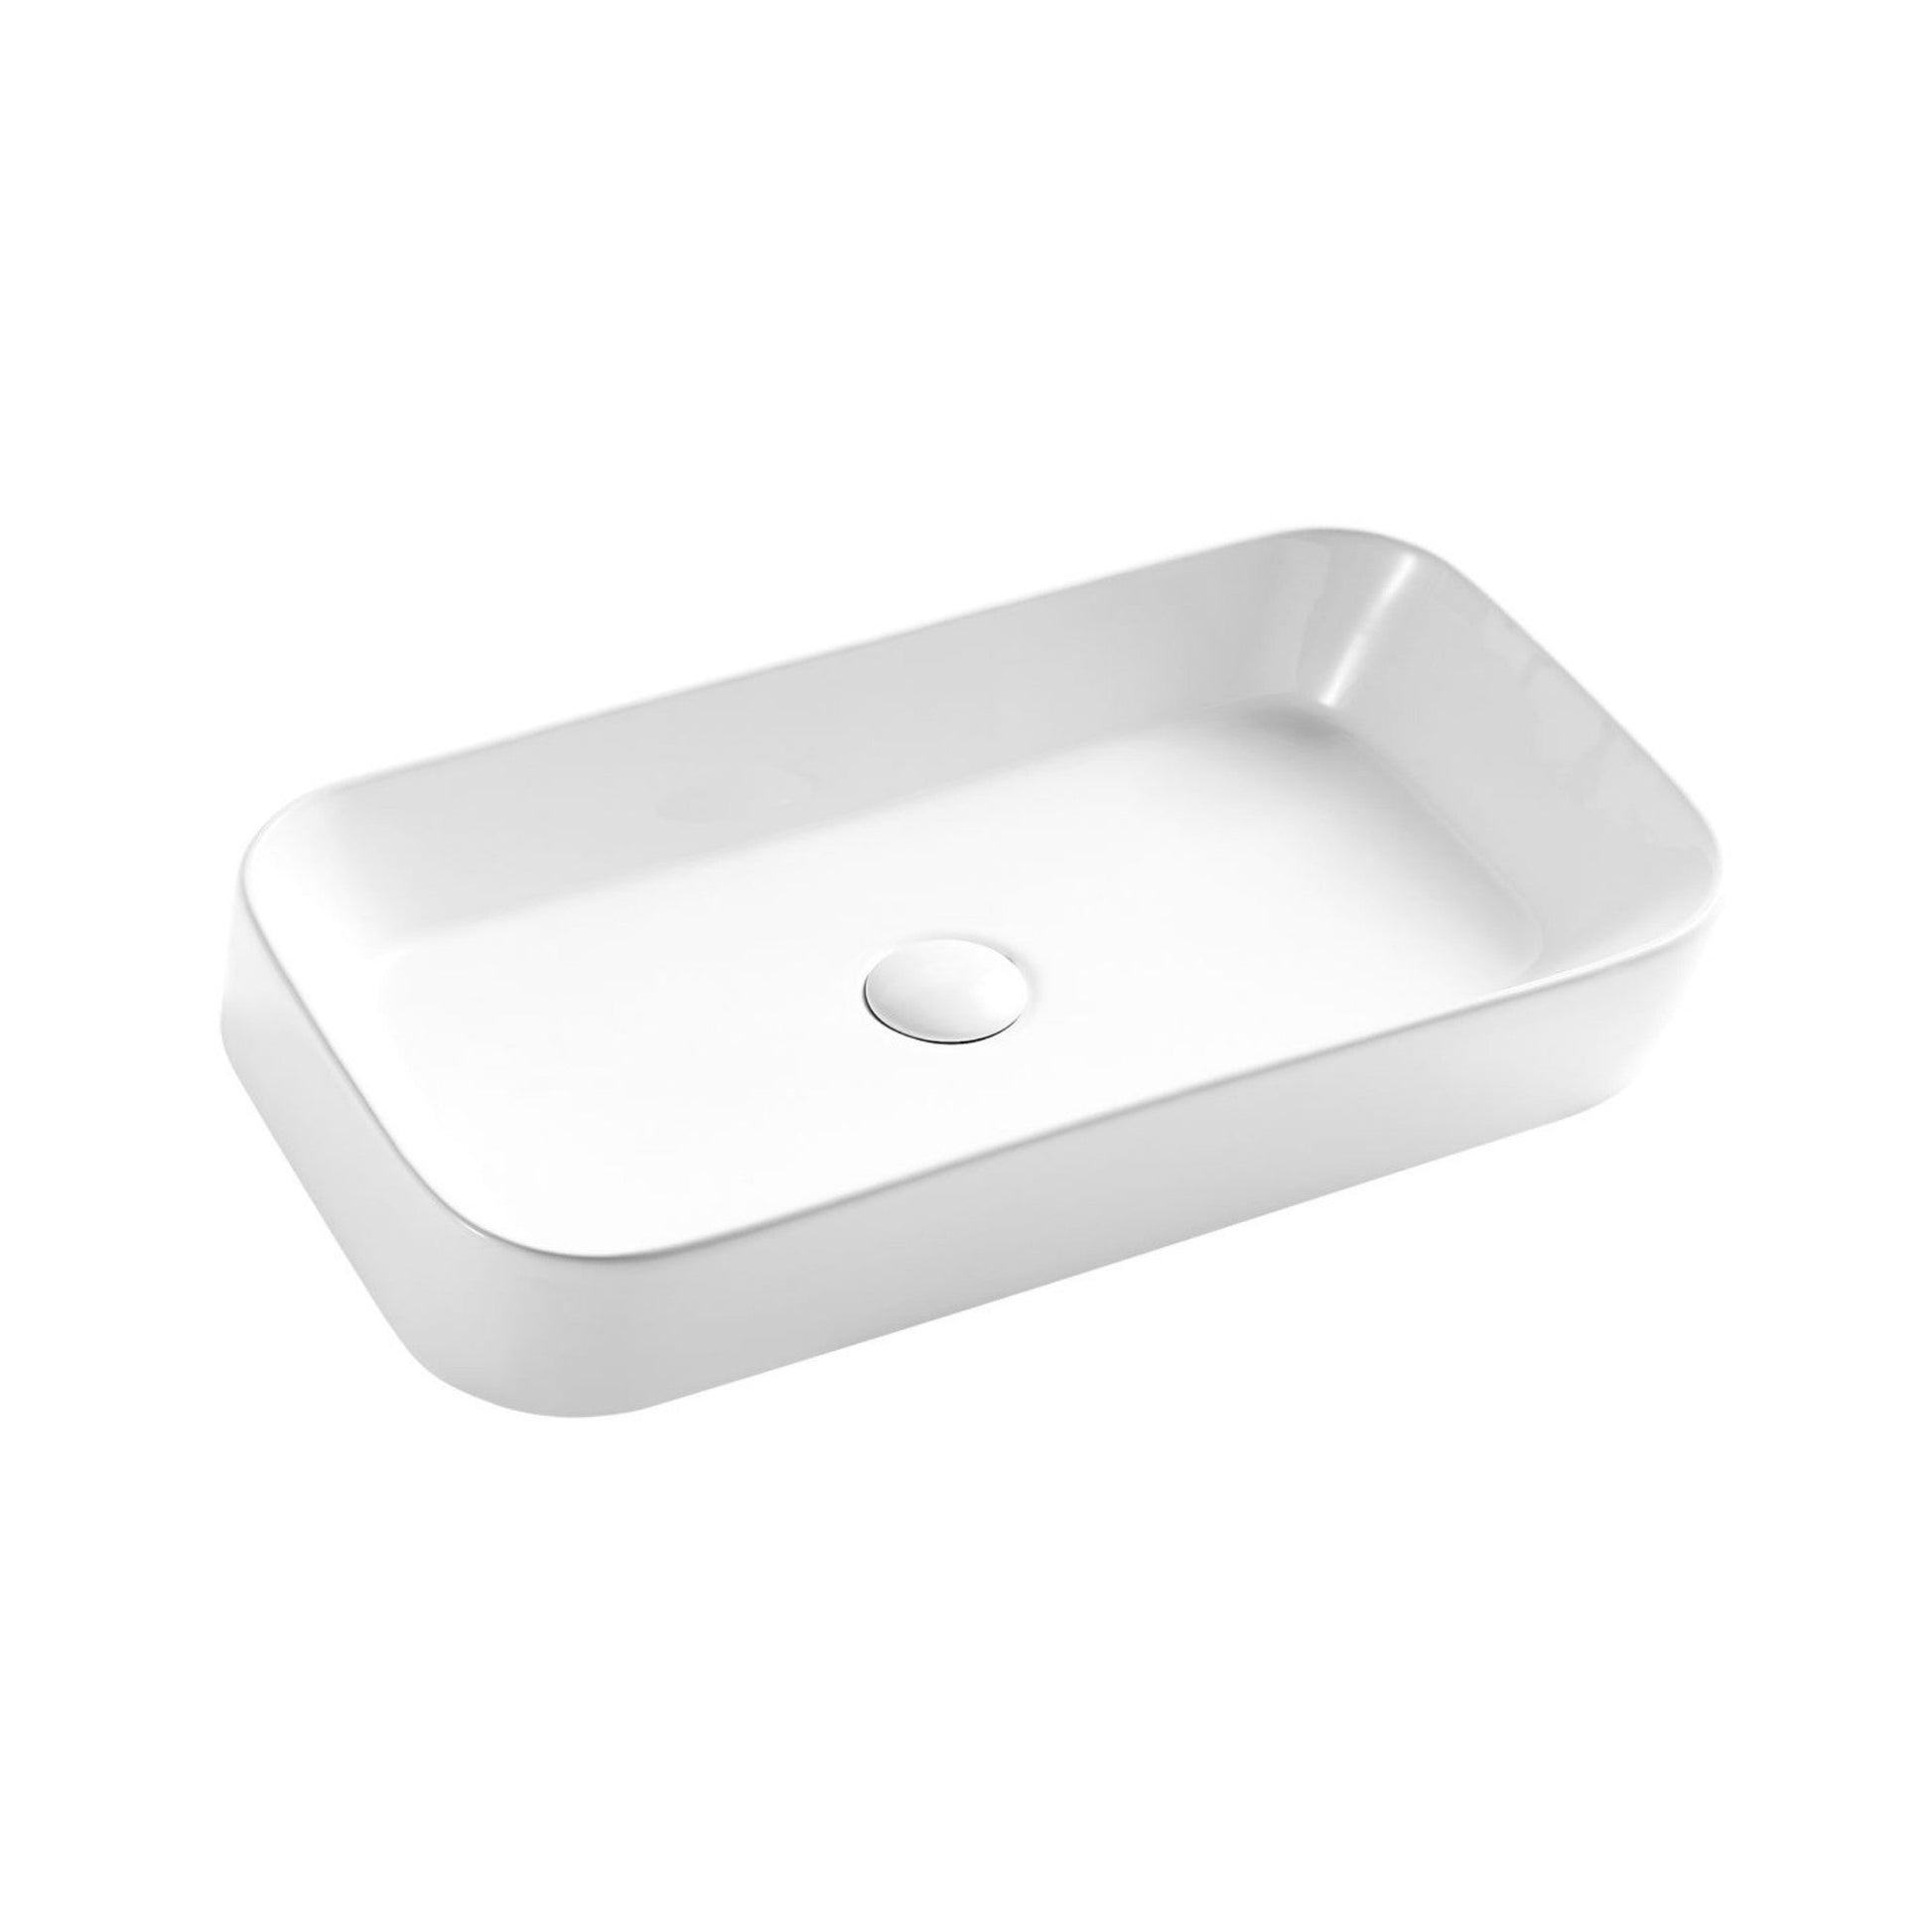 Ratel 22" x 15" White Rectangular Ceramic Vessel Bathroom Sink